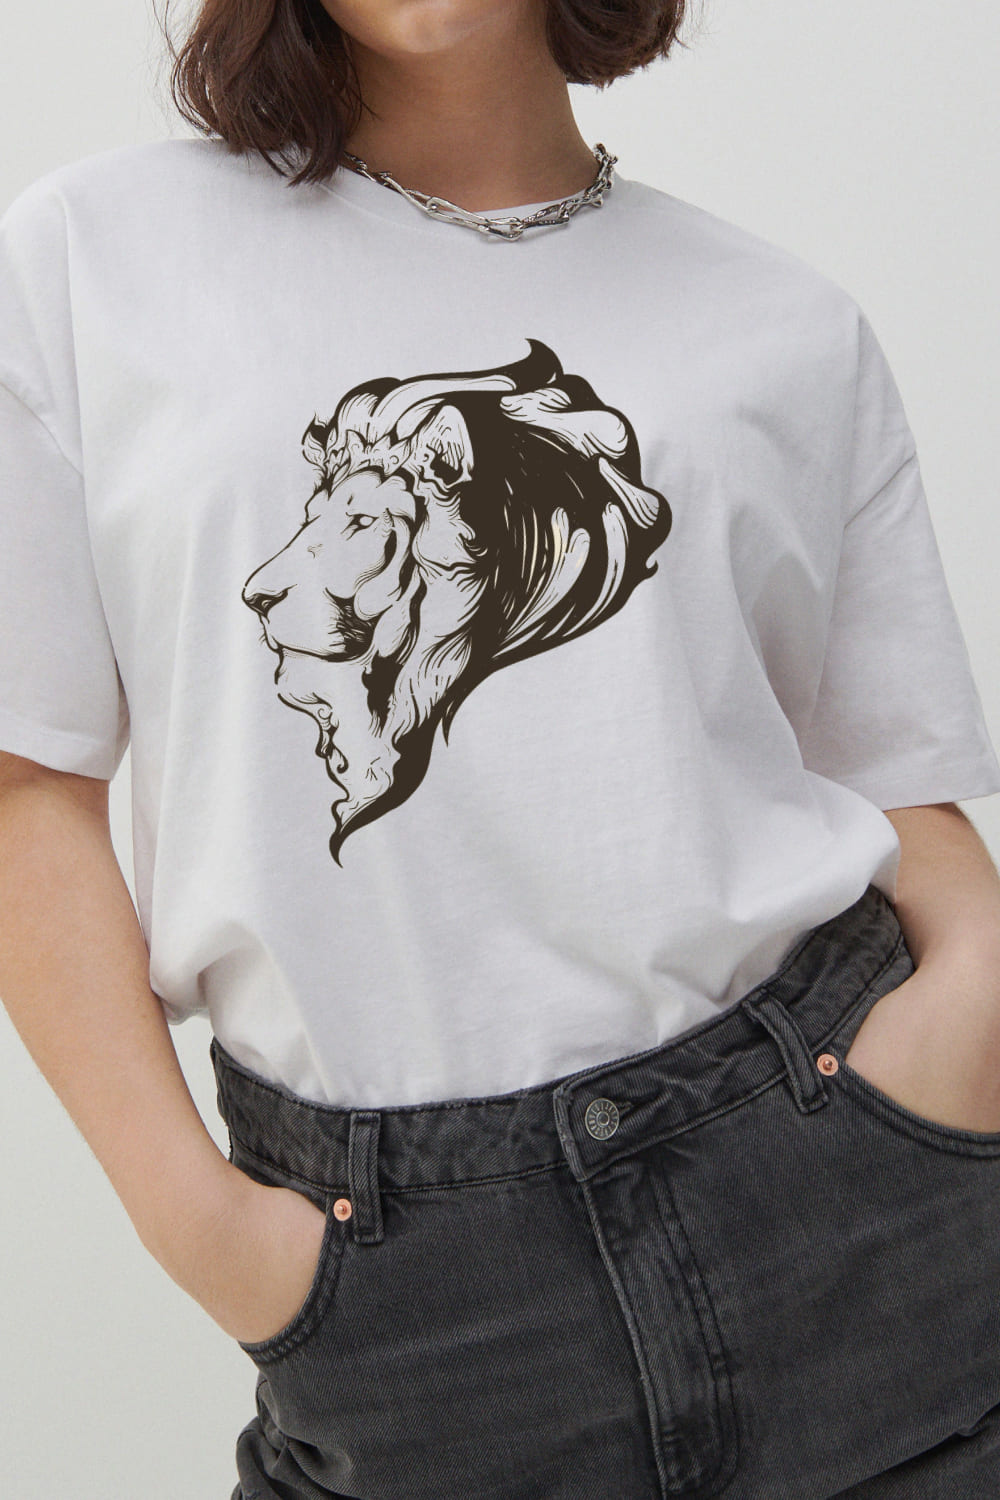 Lion Head Illustration Mascot Logo.